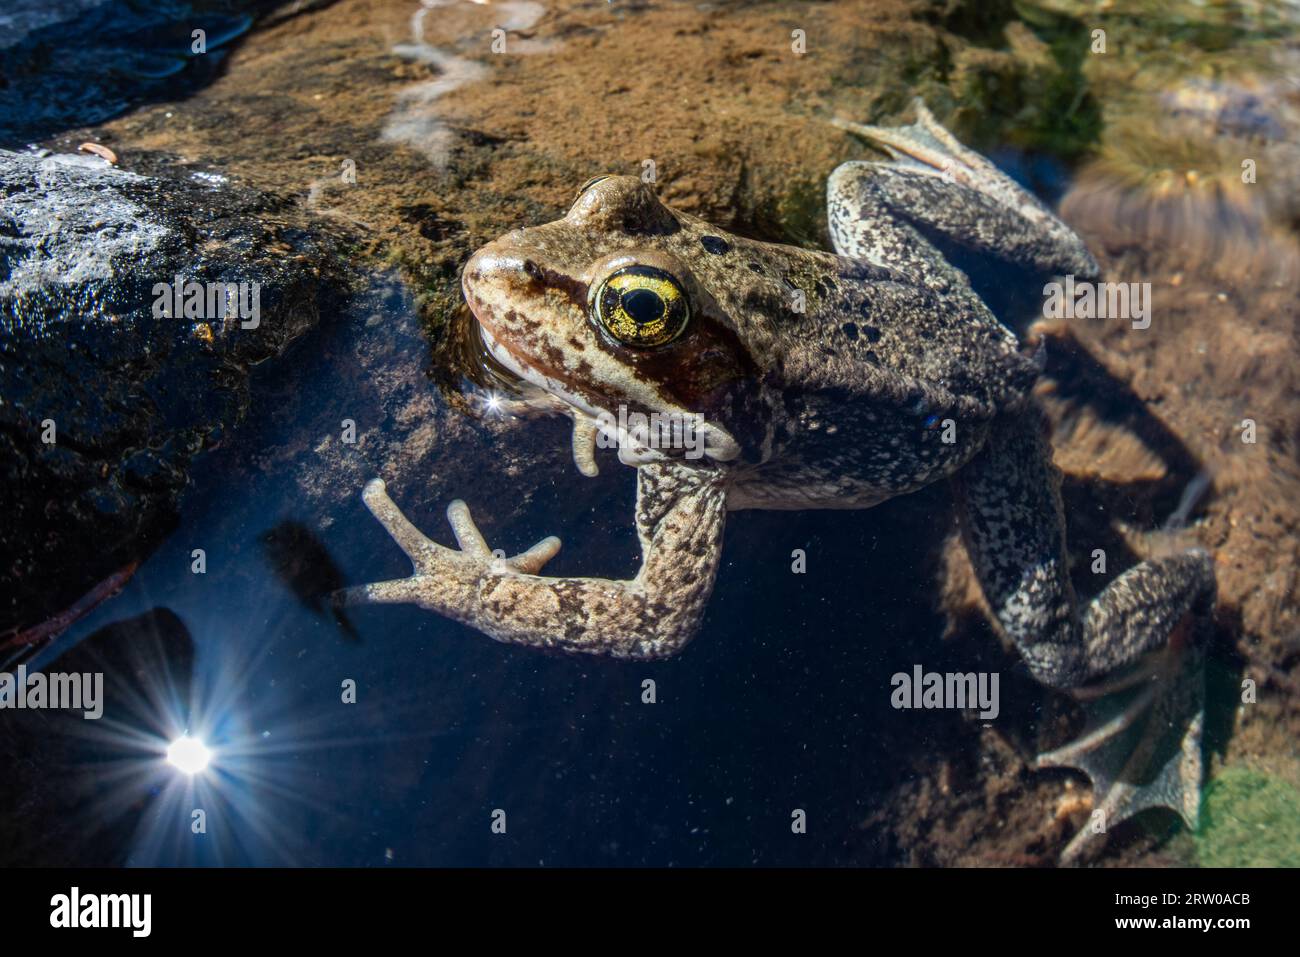 Cascades frog (Rana cascadae) a threatened amphibian species found in California, Washington and Oregon. Stock Photo